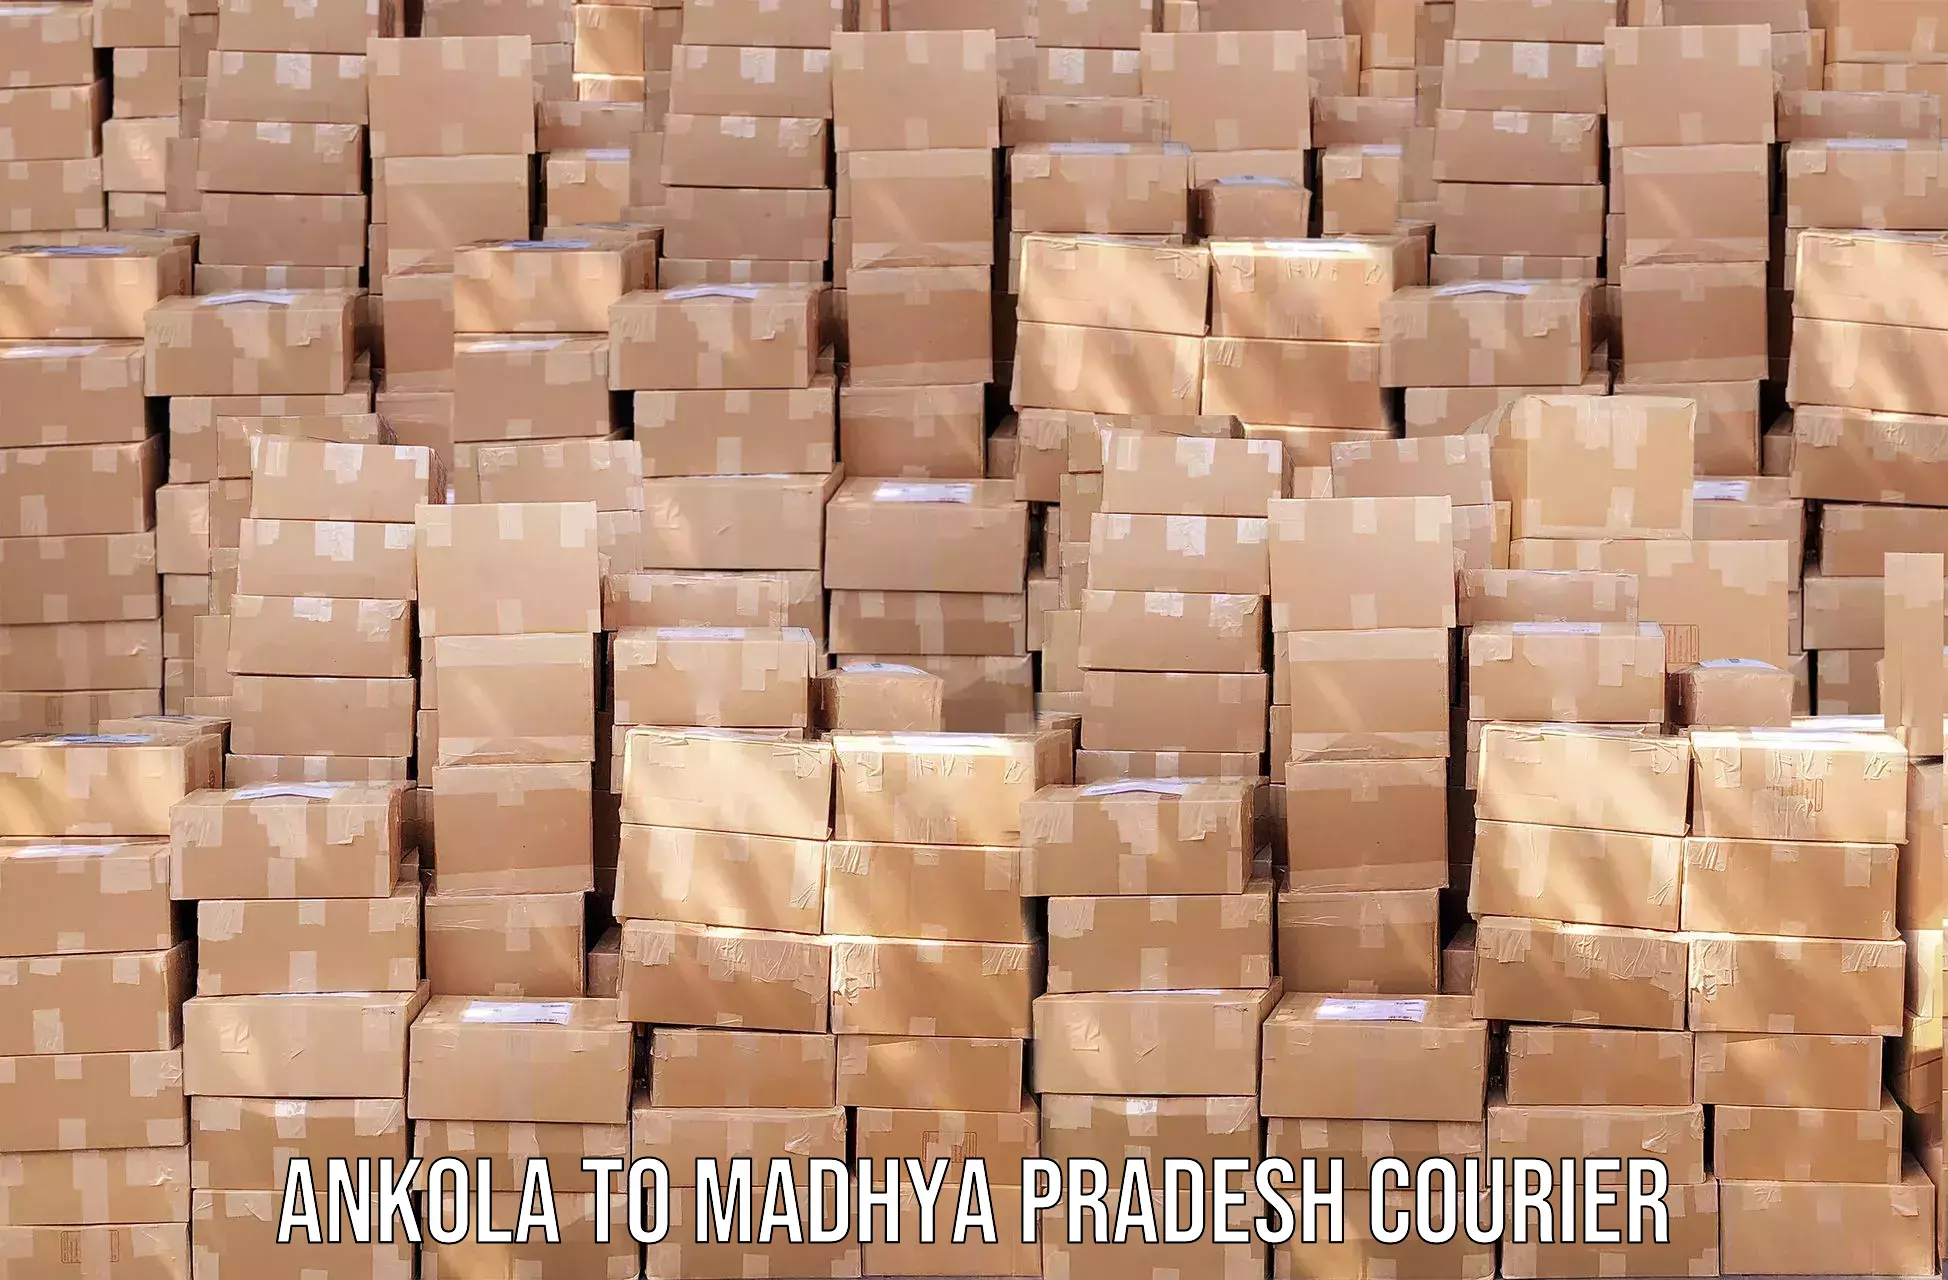 High-speed parcel service Ankola to Madhya Pradesh